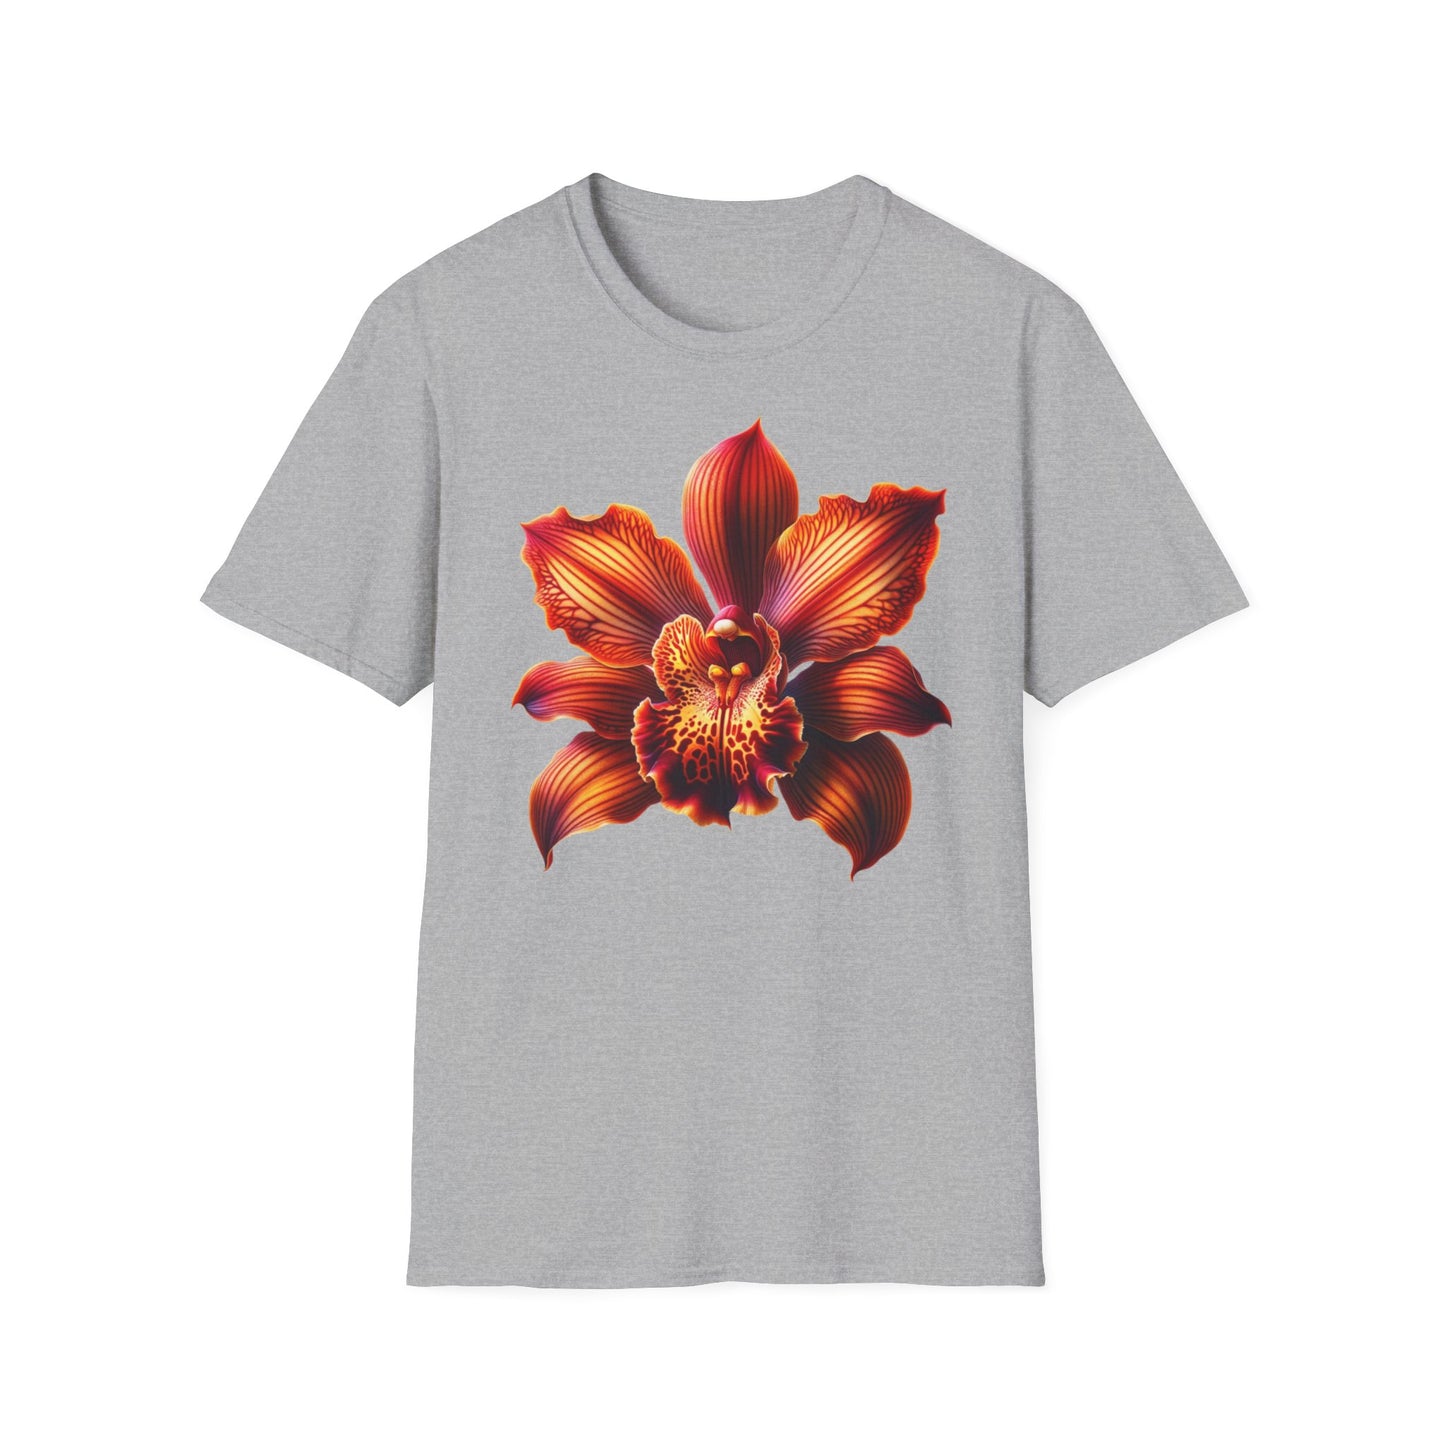 Irradia elegancia con nuestra camiseta Golden Orchid